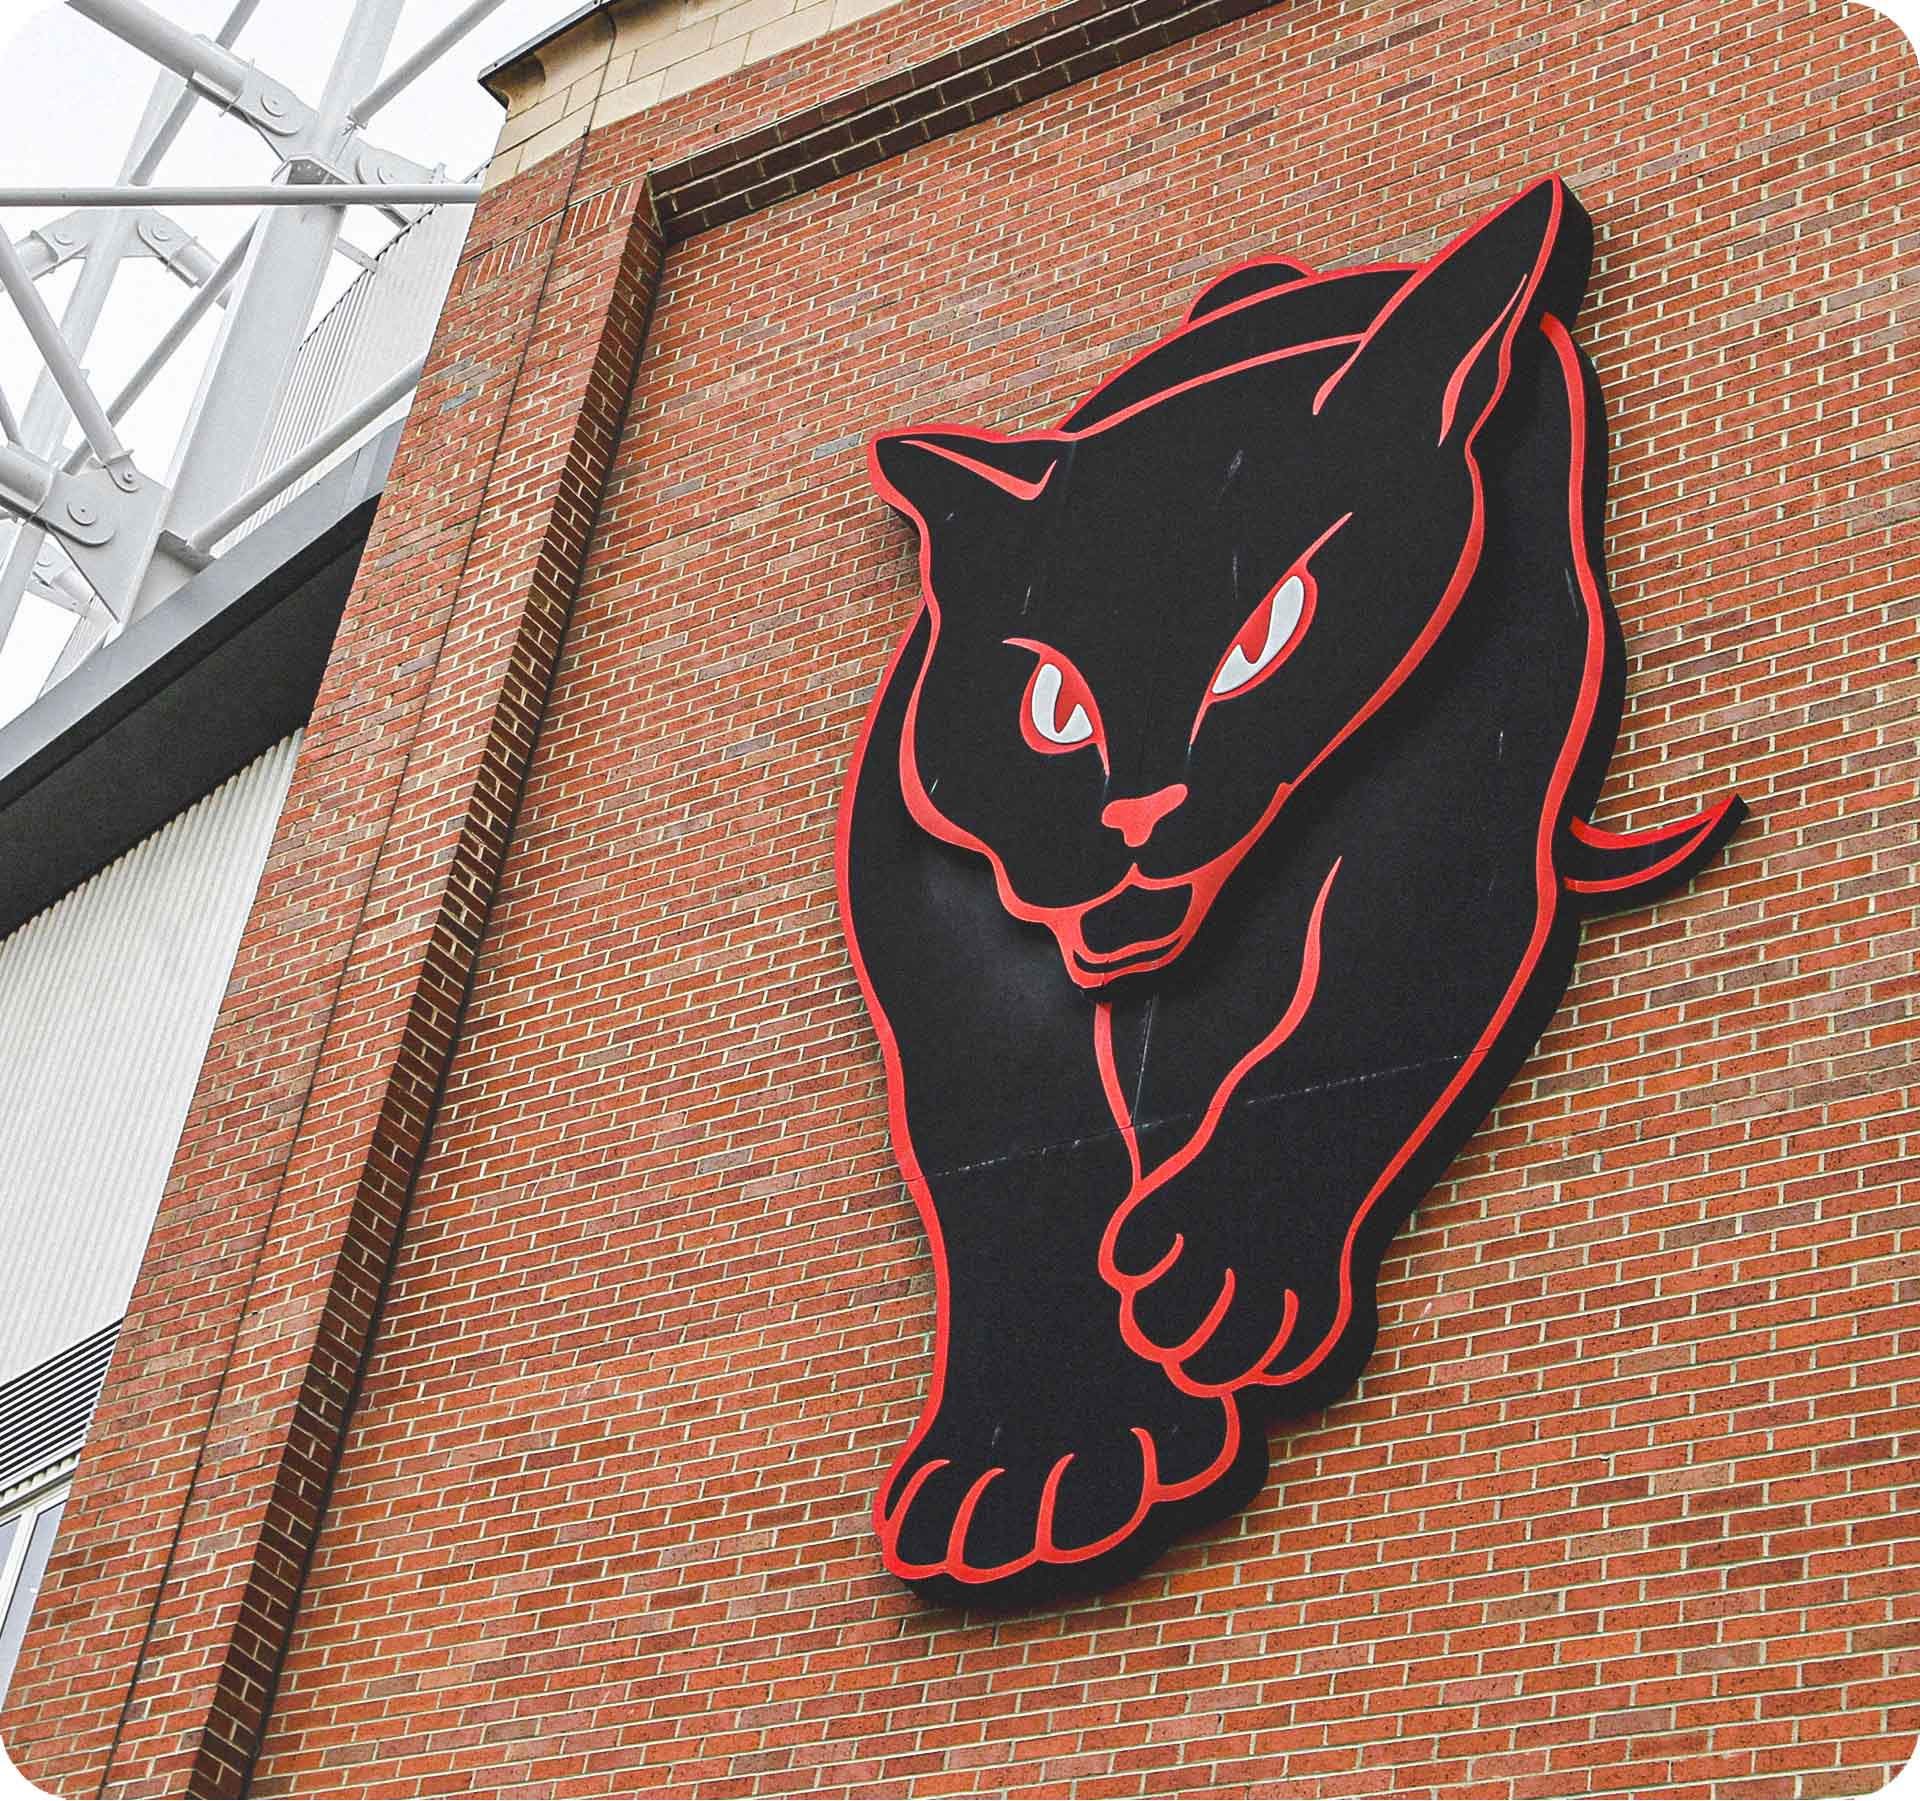 Photograph of Sunderland's Black Cat Emblem